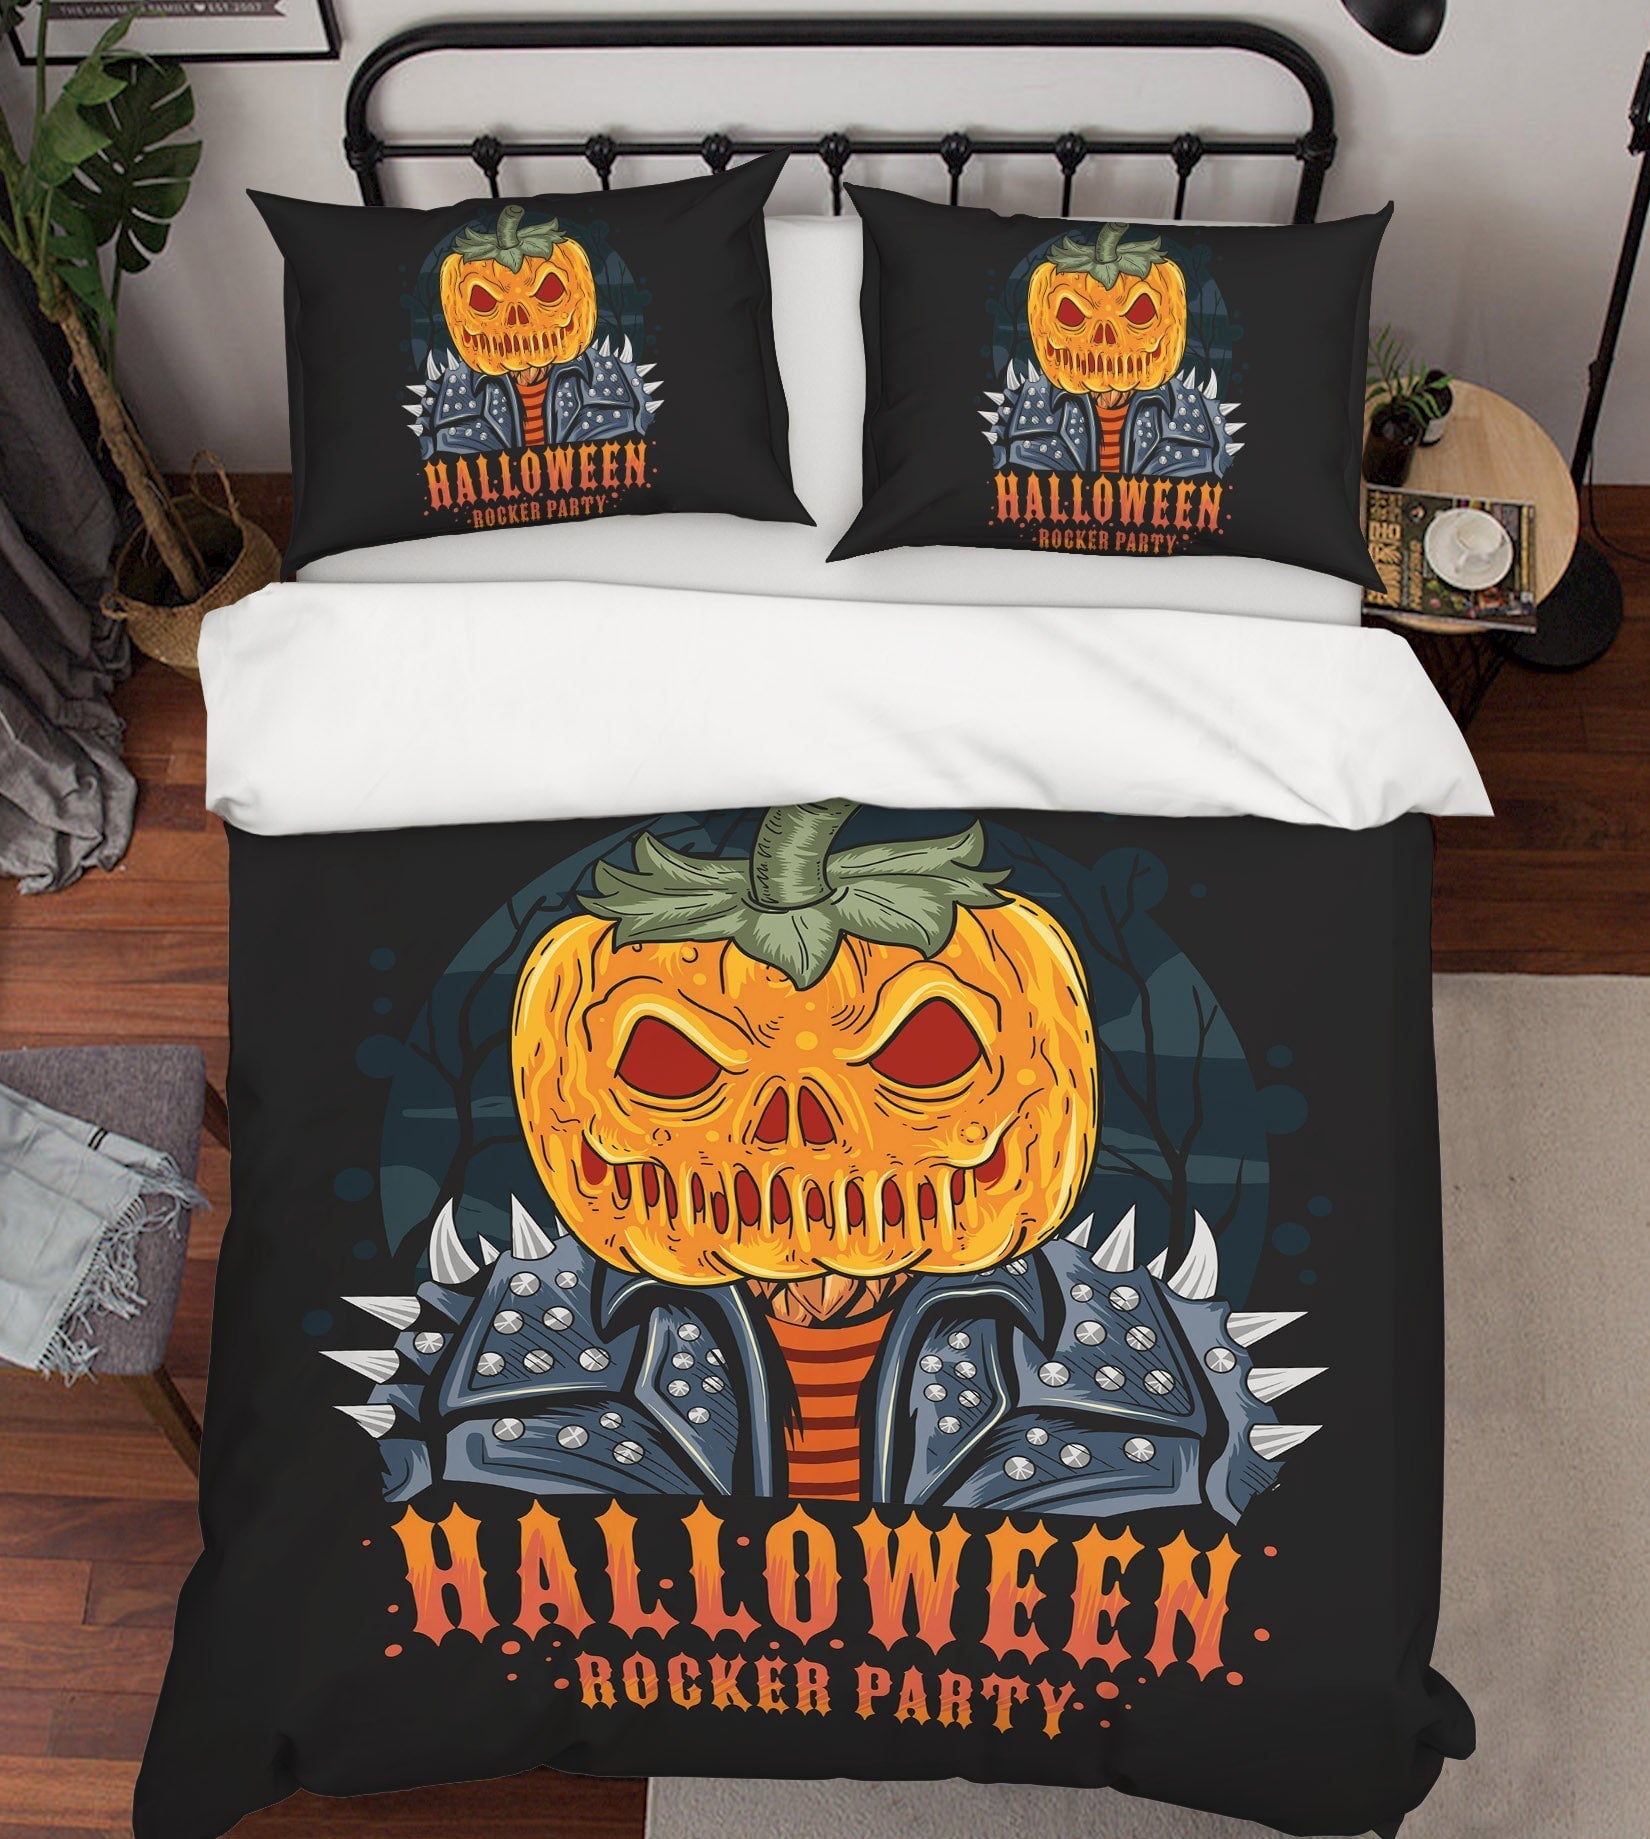 3D Pumpkin Armor 1211 Halloween Bed Pillowcases Quilt Quiet Covers AJ Creativity Home 